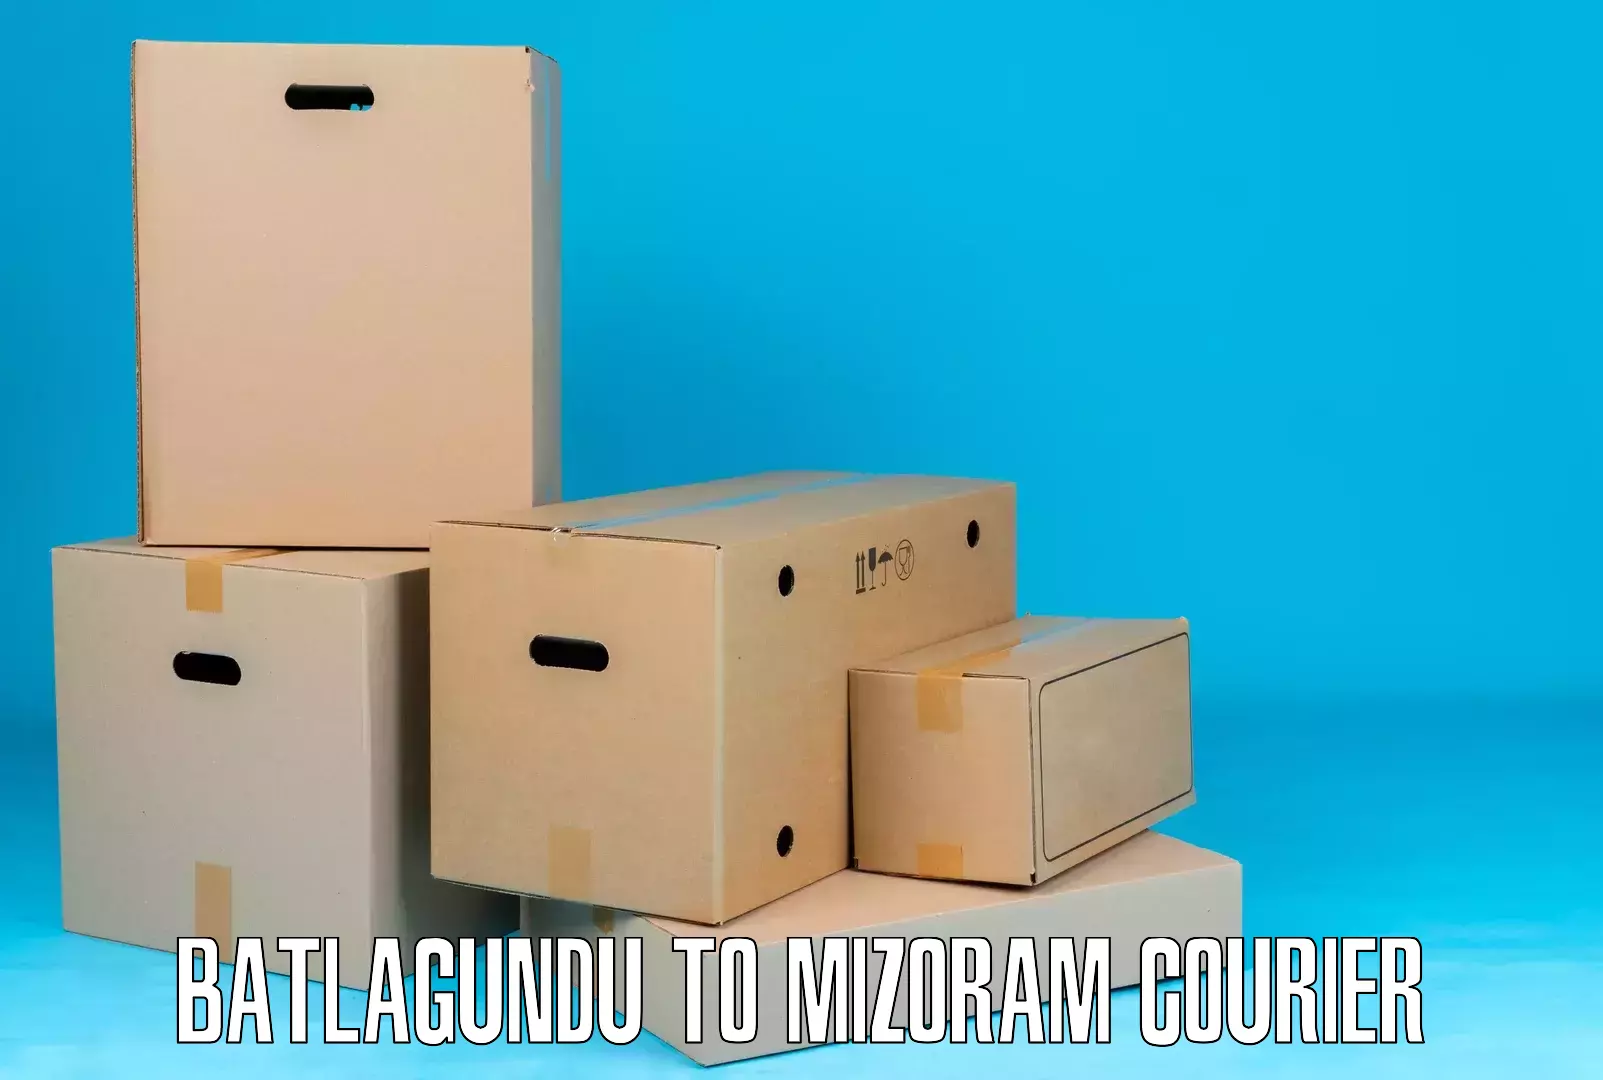 Bulk courier orders in Batlagundu to Siaha